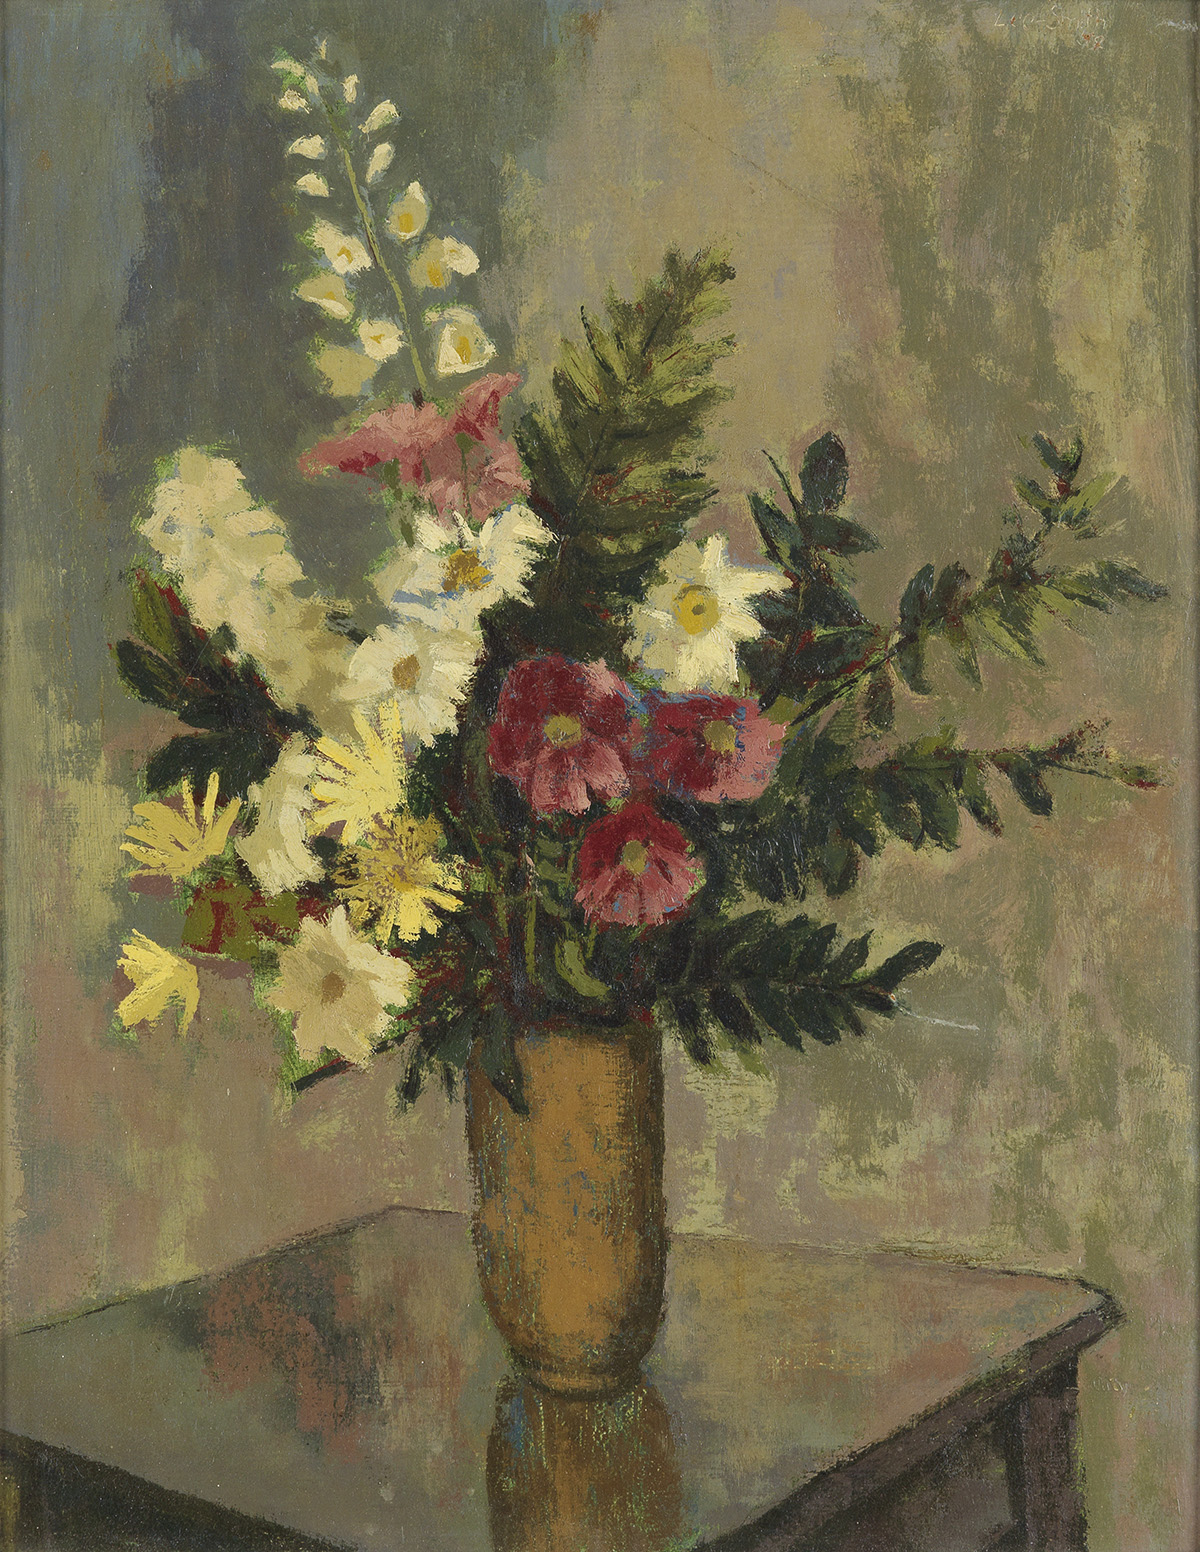 HUGHIE LEE-SMITH (1915 - 1999) Untitled (Floral Still Life).